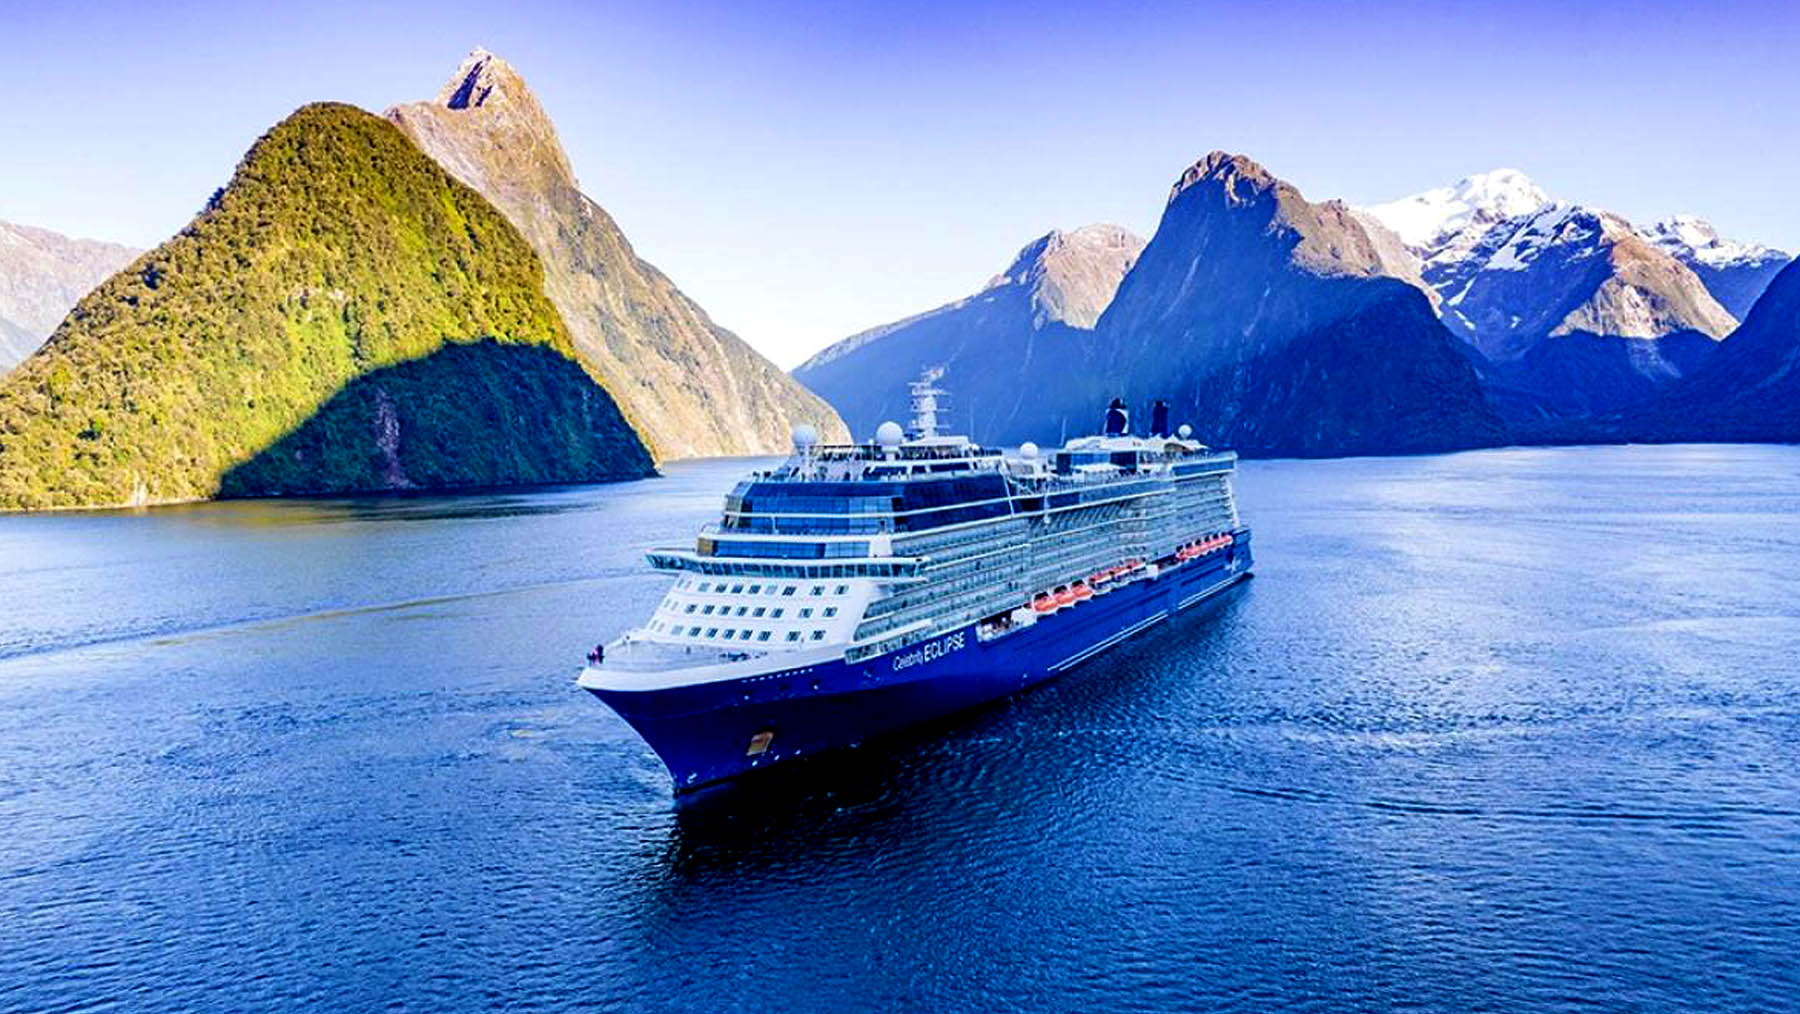 Passengers of Celebrity Cruise Line visit New Zealand via last minute deals.